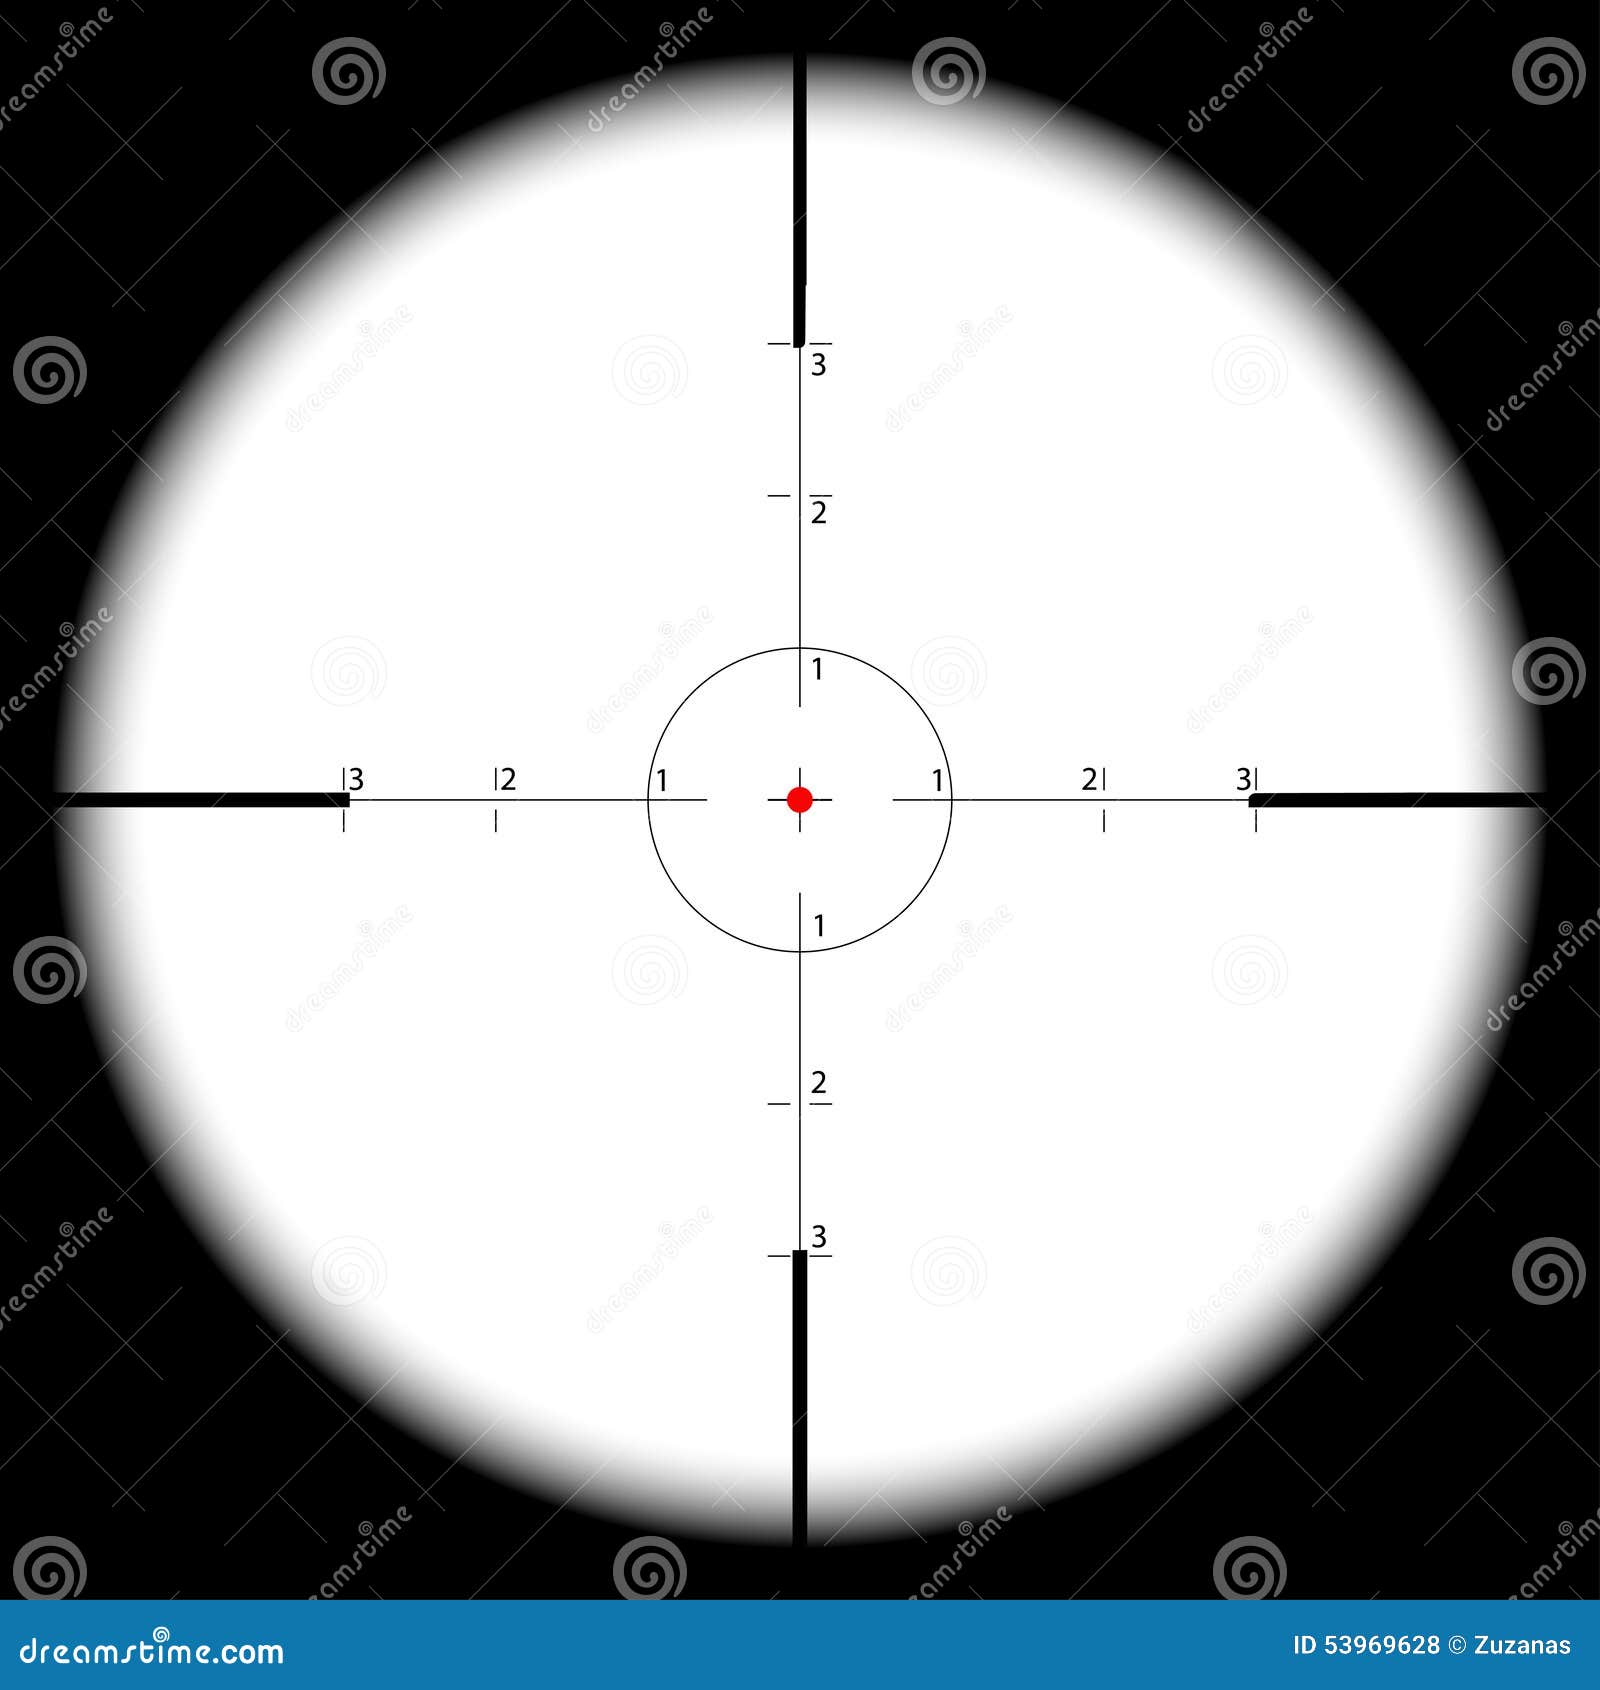 sniper's scope sight view